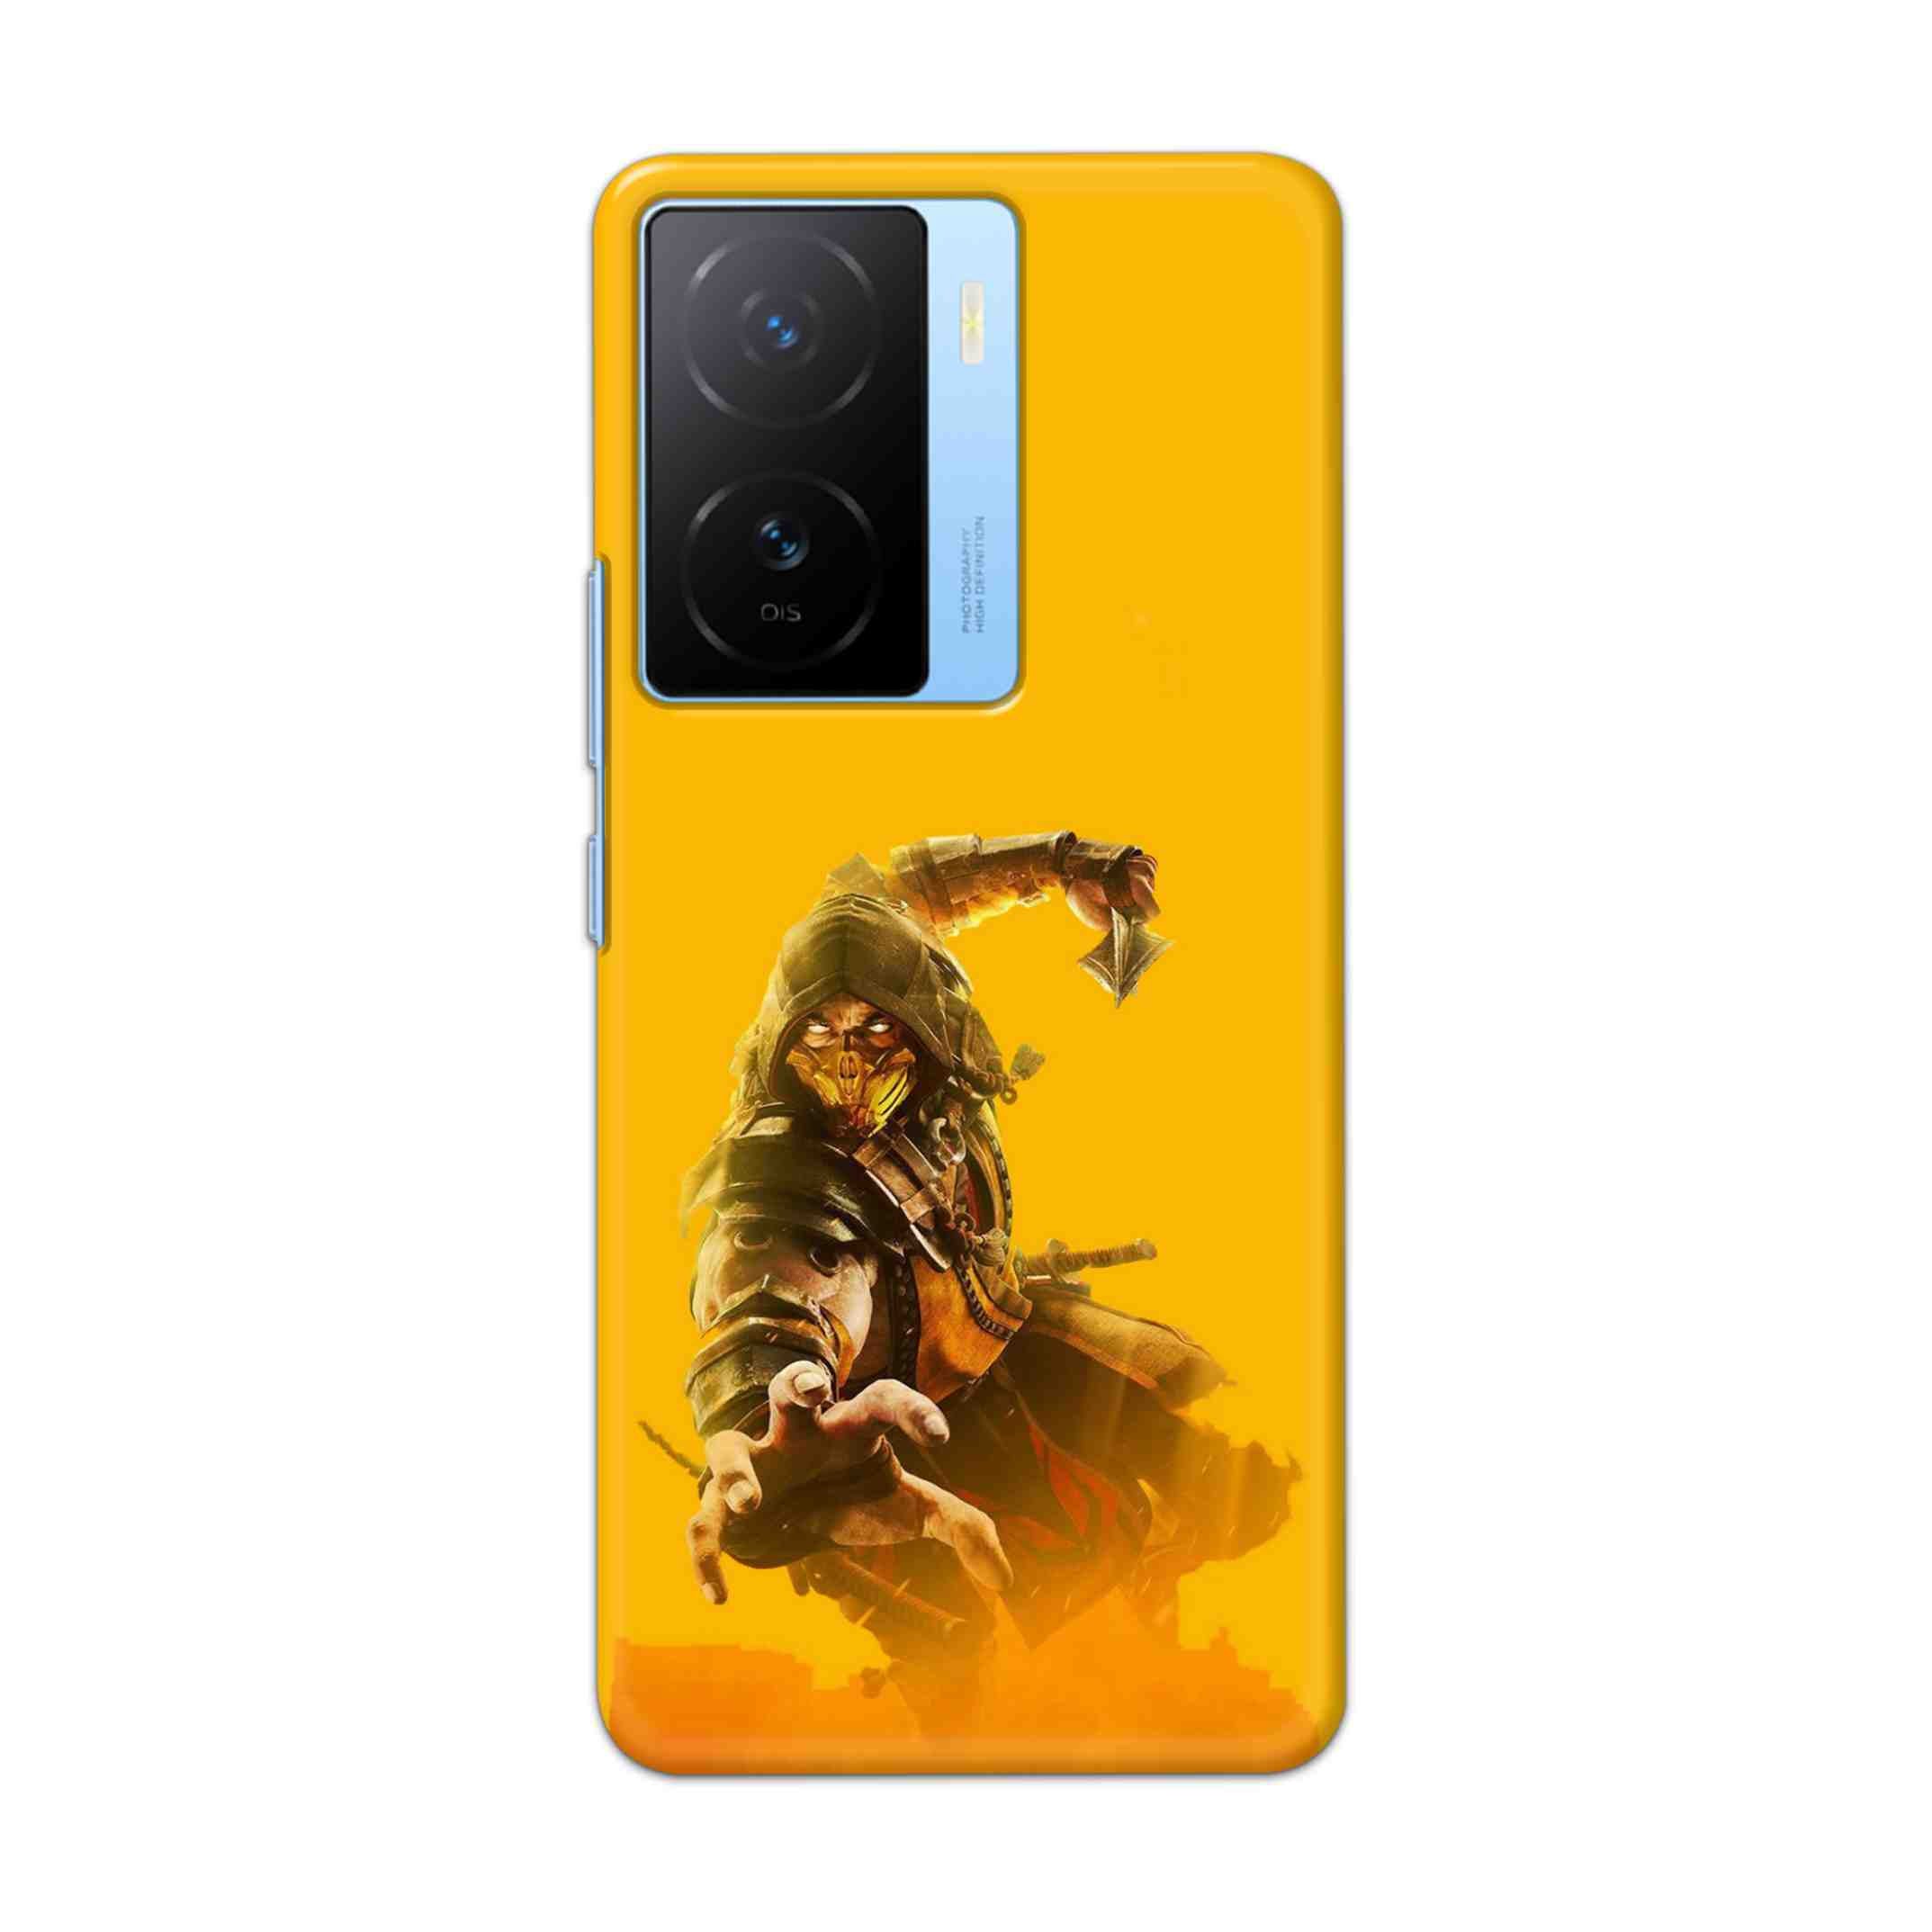 Buy Mortal Kombat Hard Back Mobile Phone Case/Cover For iQOO Z7s Online